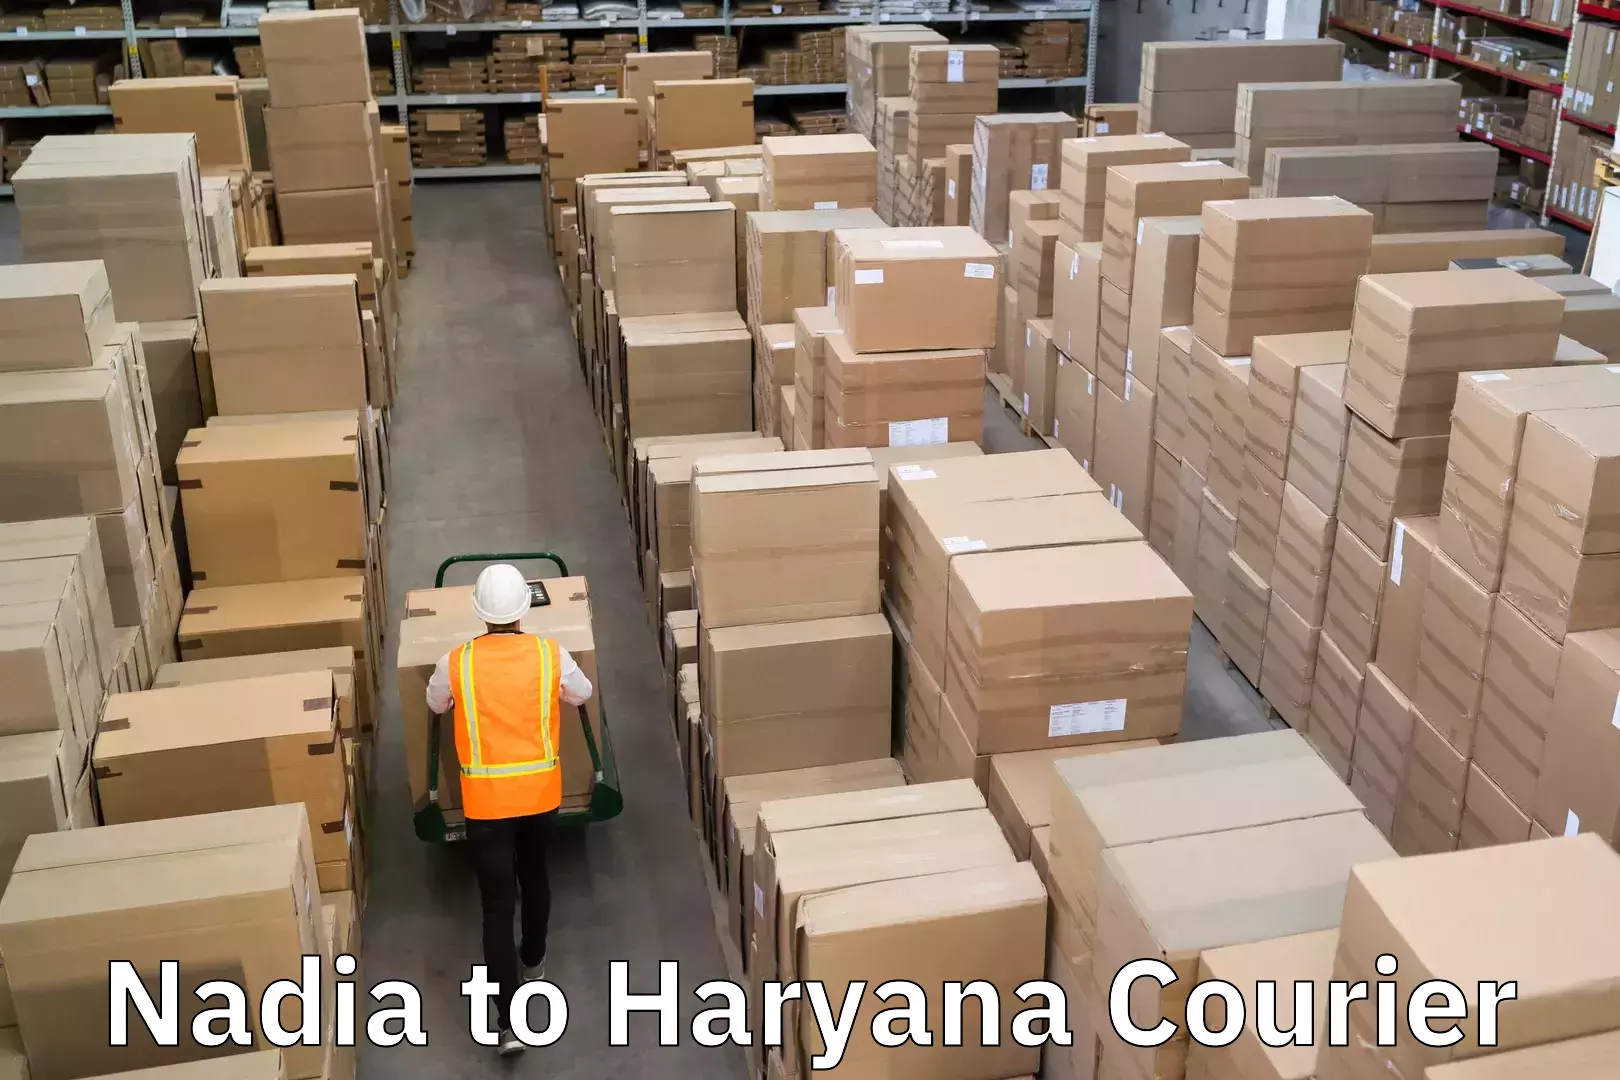 High-speed parcel service Nadia to Haryana